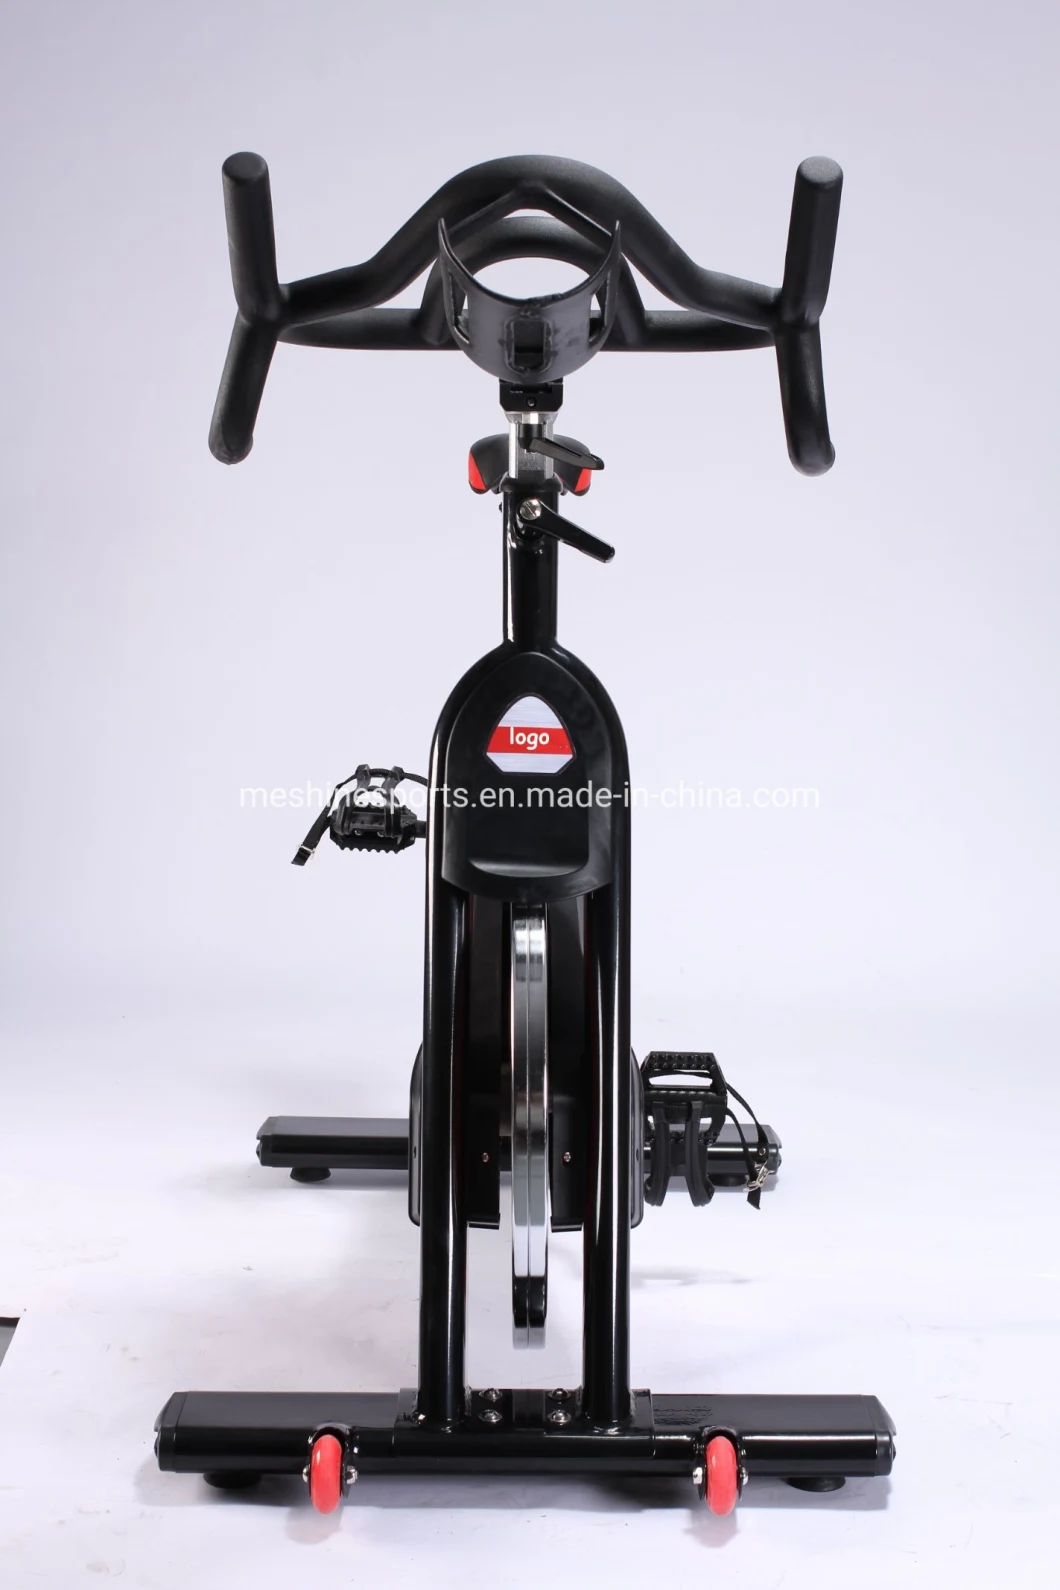 Home Gym Exercise Bike Magnetic Spinning Bike Commercial Use 18kg 20kg